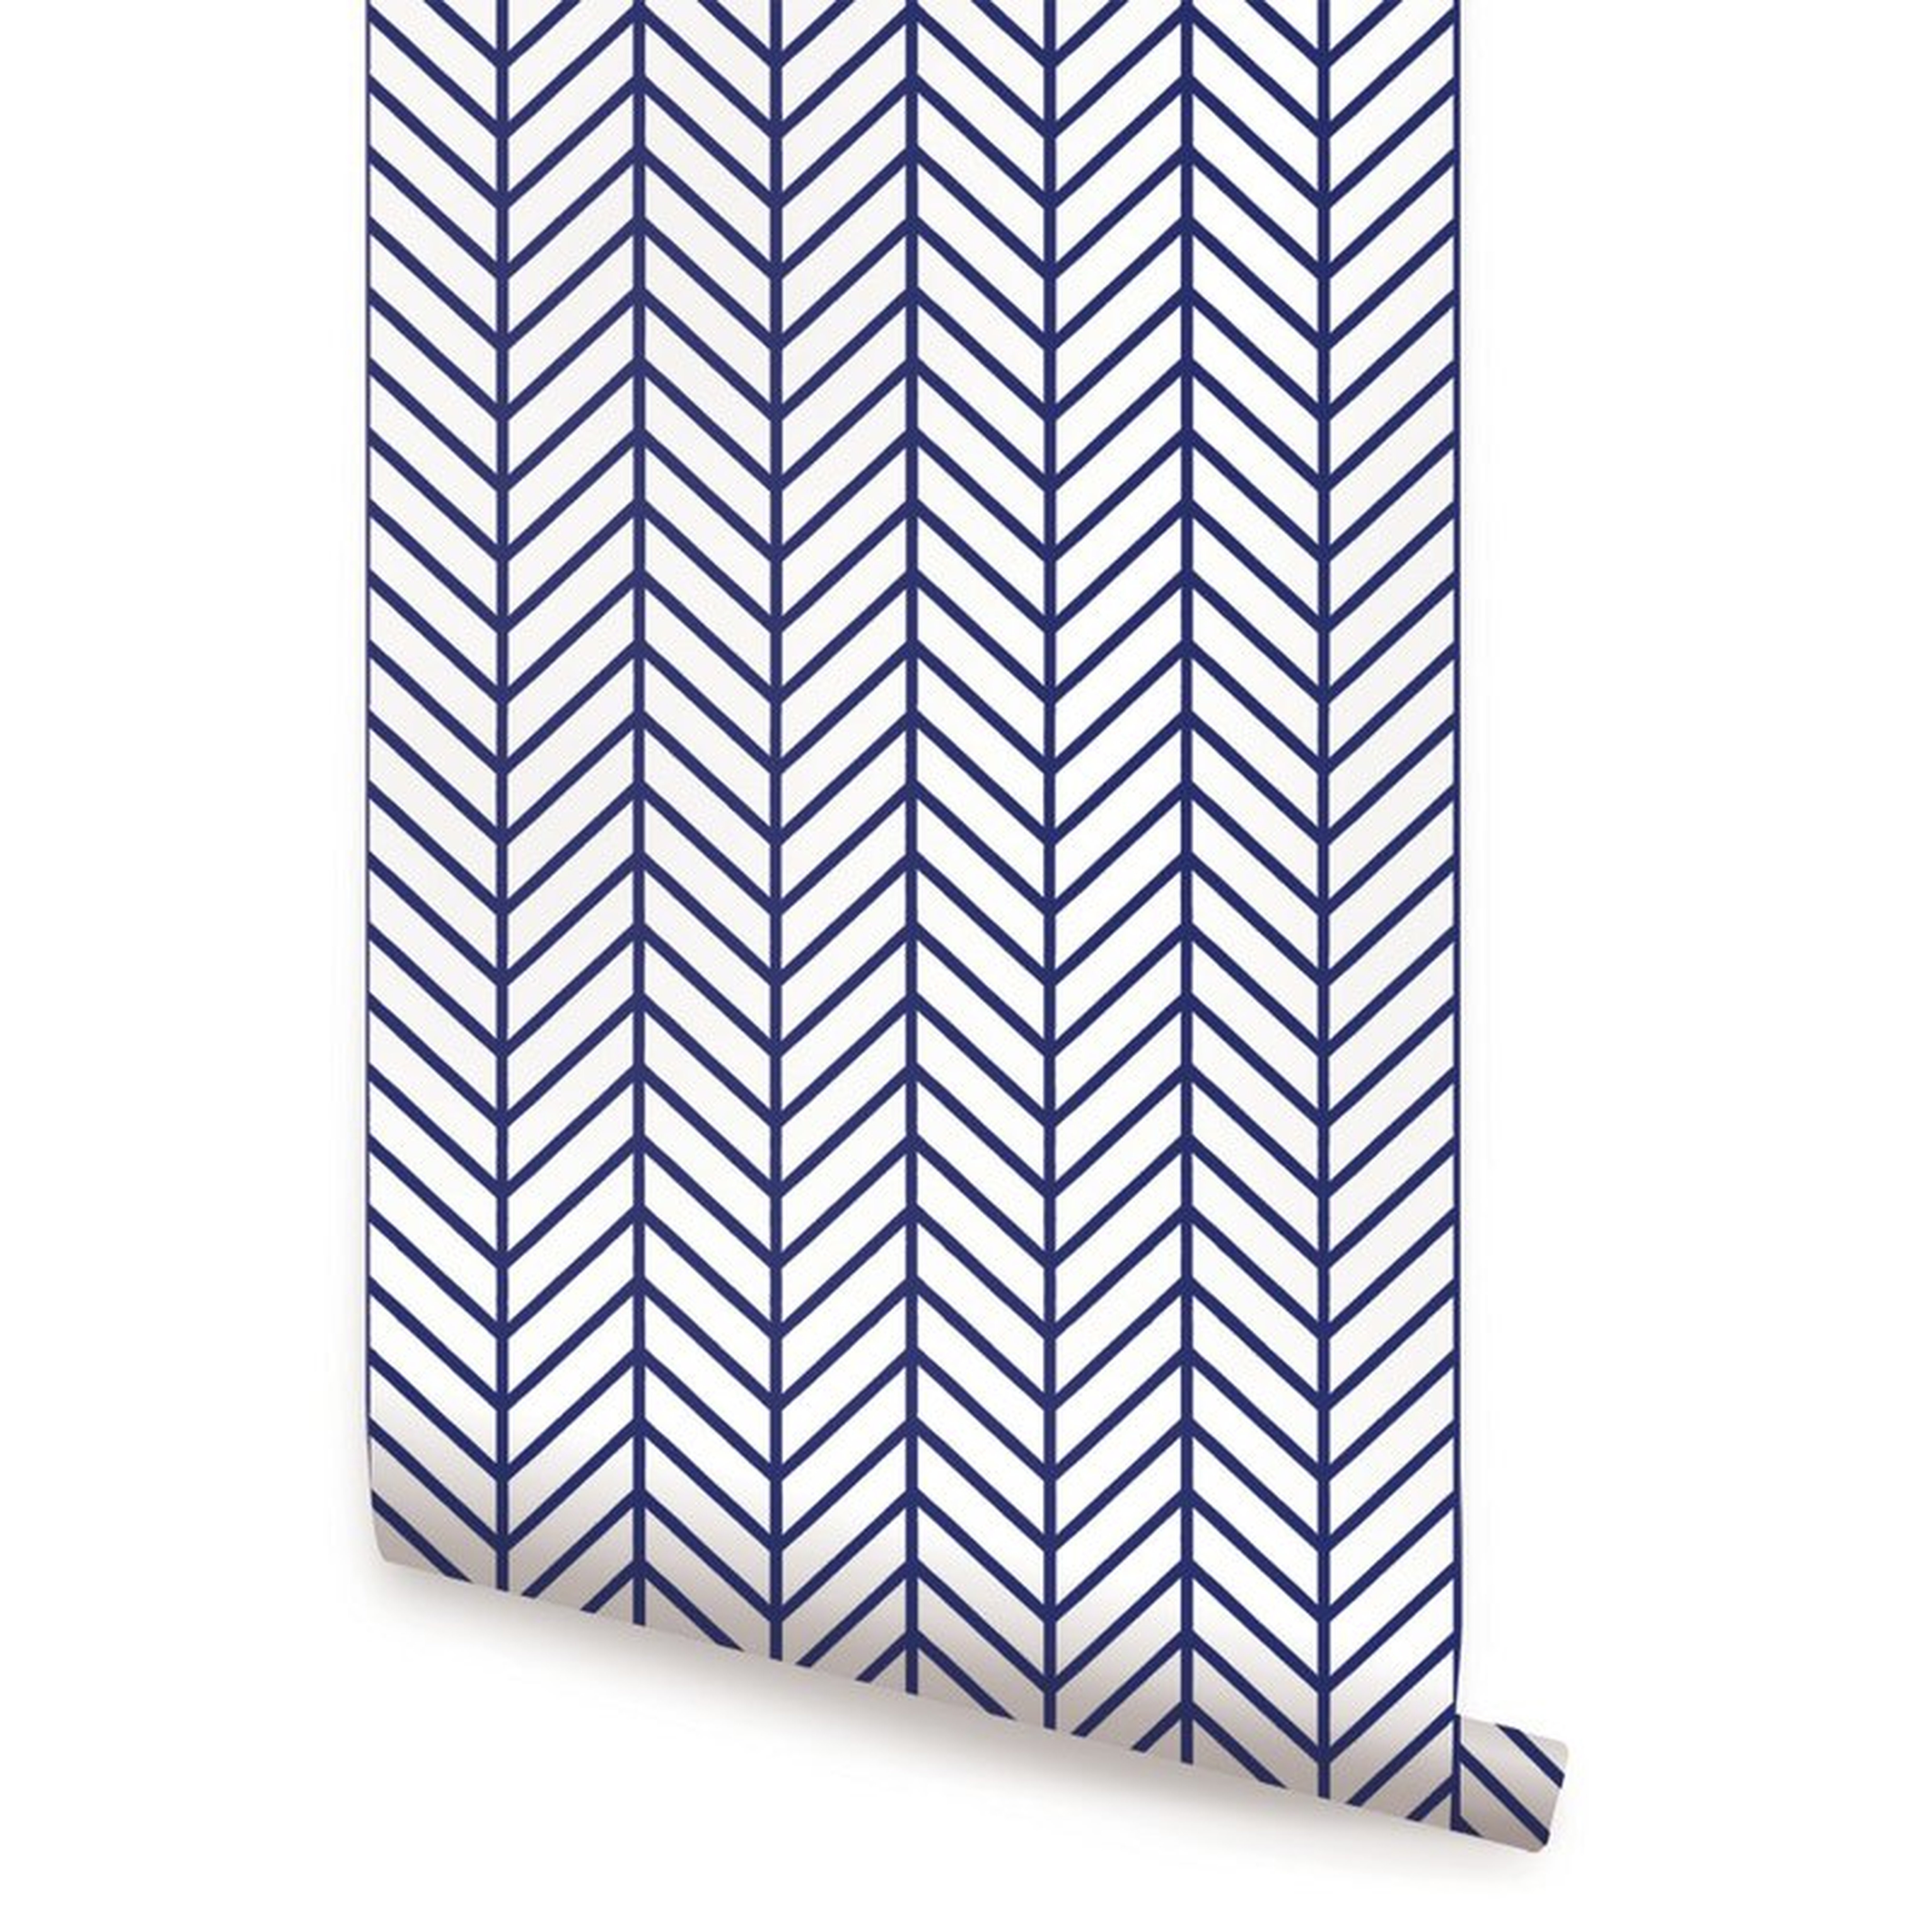 Nevaeh Herringbone Line Matte Fine Fabric Weave Peel and Stick Wallpaper Panel - Birch Lane